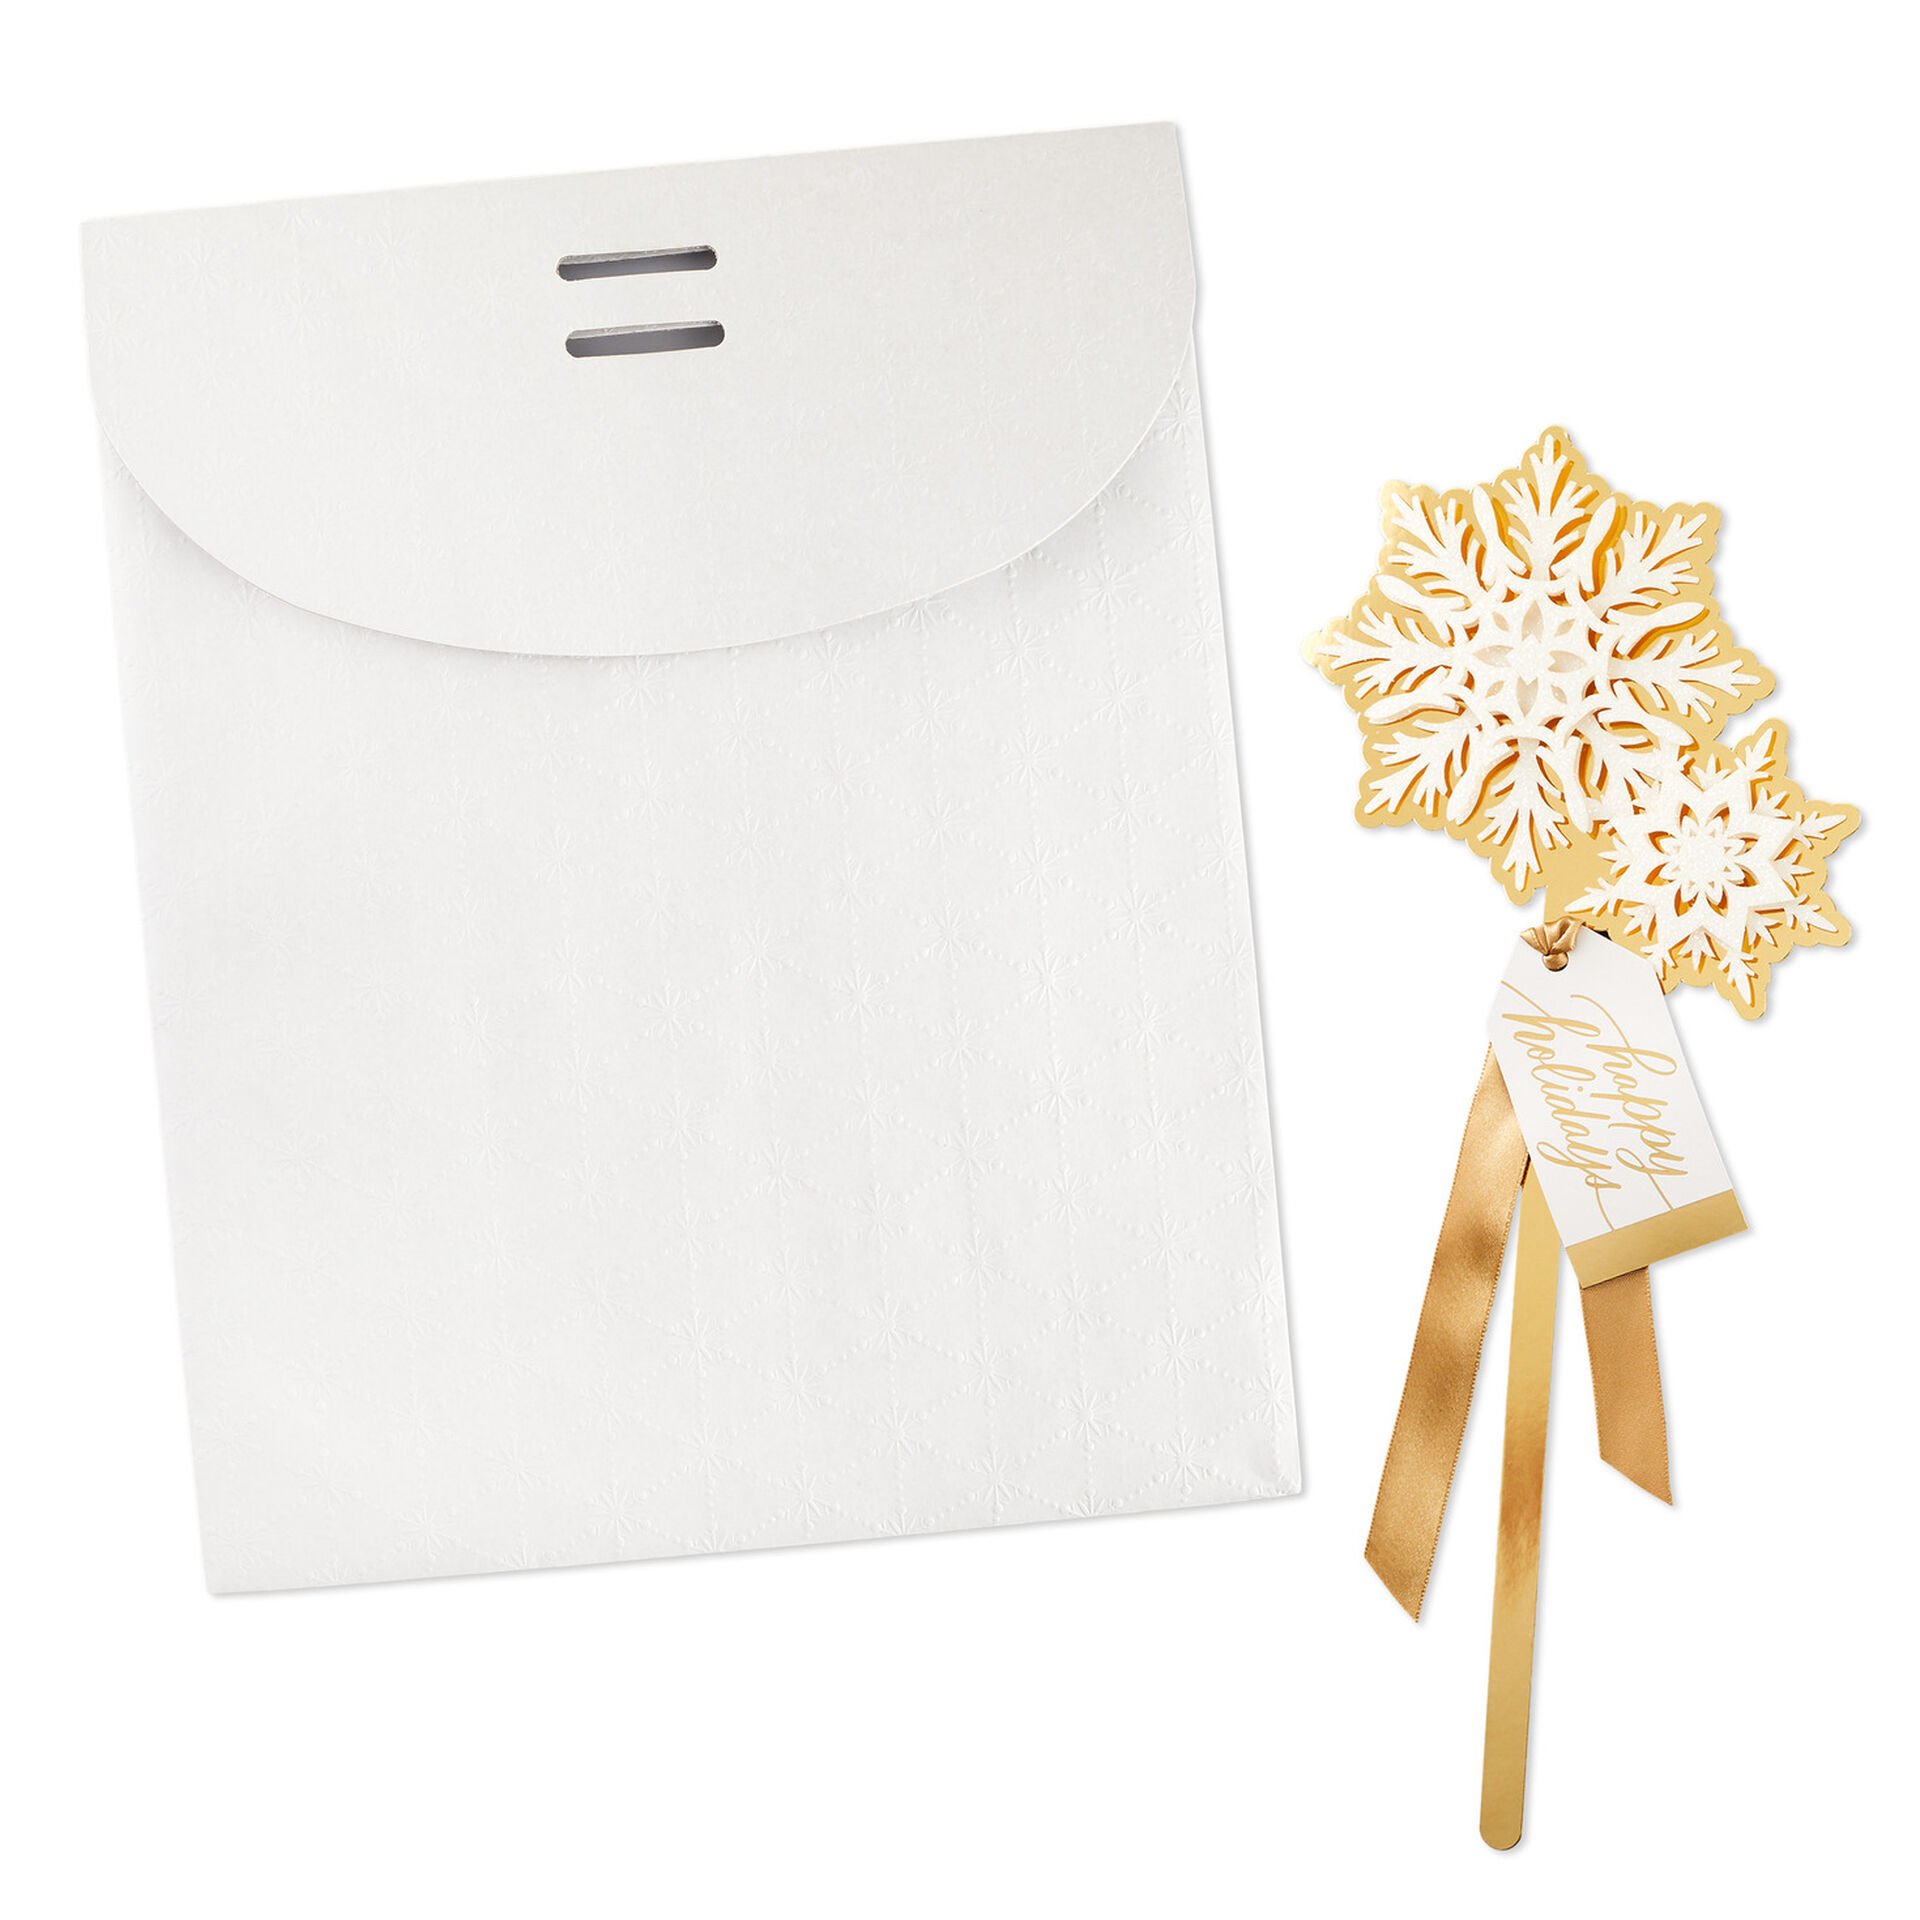 Snowflakes-Large-FoldTop-Gift-Bag-With-Pick_999XGB8315_05.jpeg